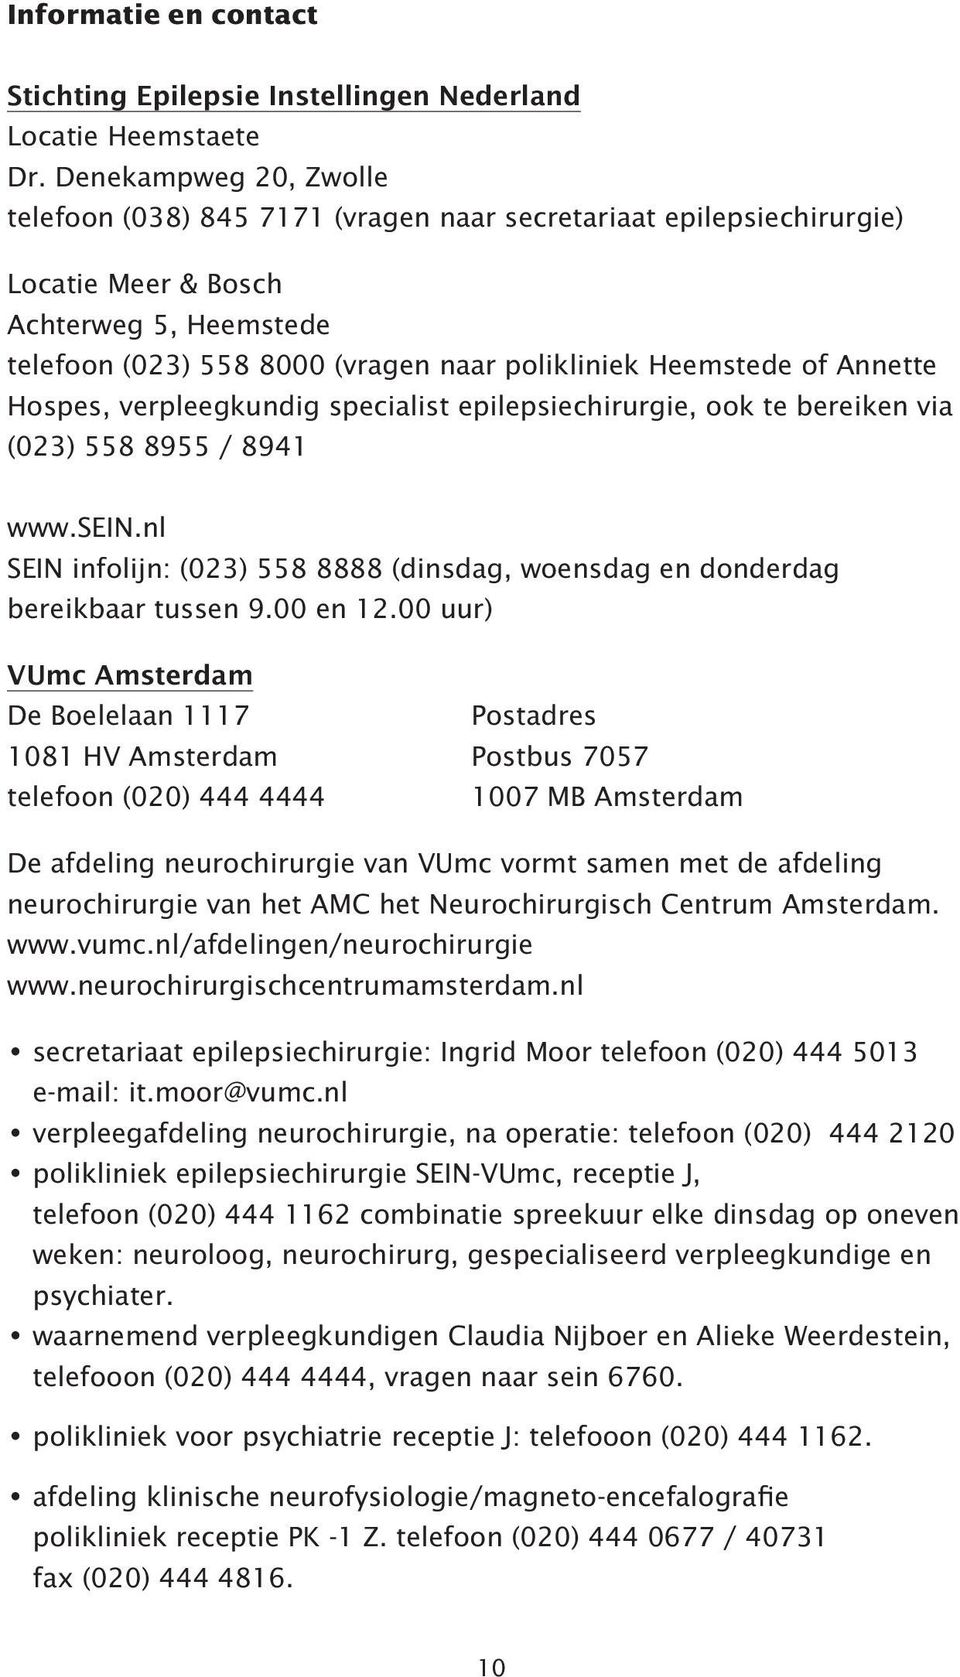 Annette Hospes, verpleegkundig specialist epilepsiechirurgie, ook te bereiken via (023) 558 8955 / 8941 www.sein.nl SEIN infolijn: (023) 558 8888 (dinsdag, woensdag en donderdag bereikbaar tussen 9.